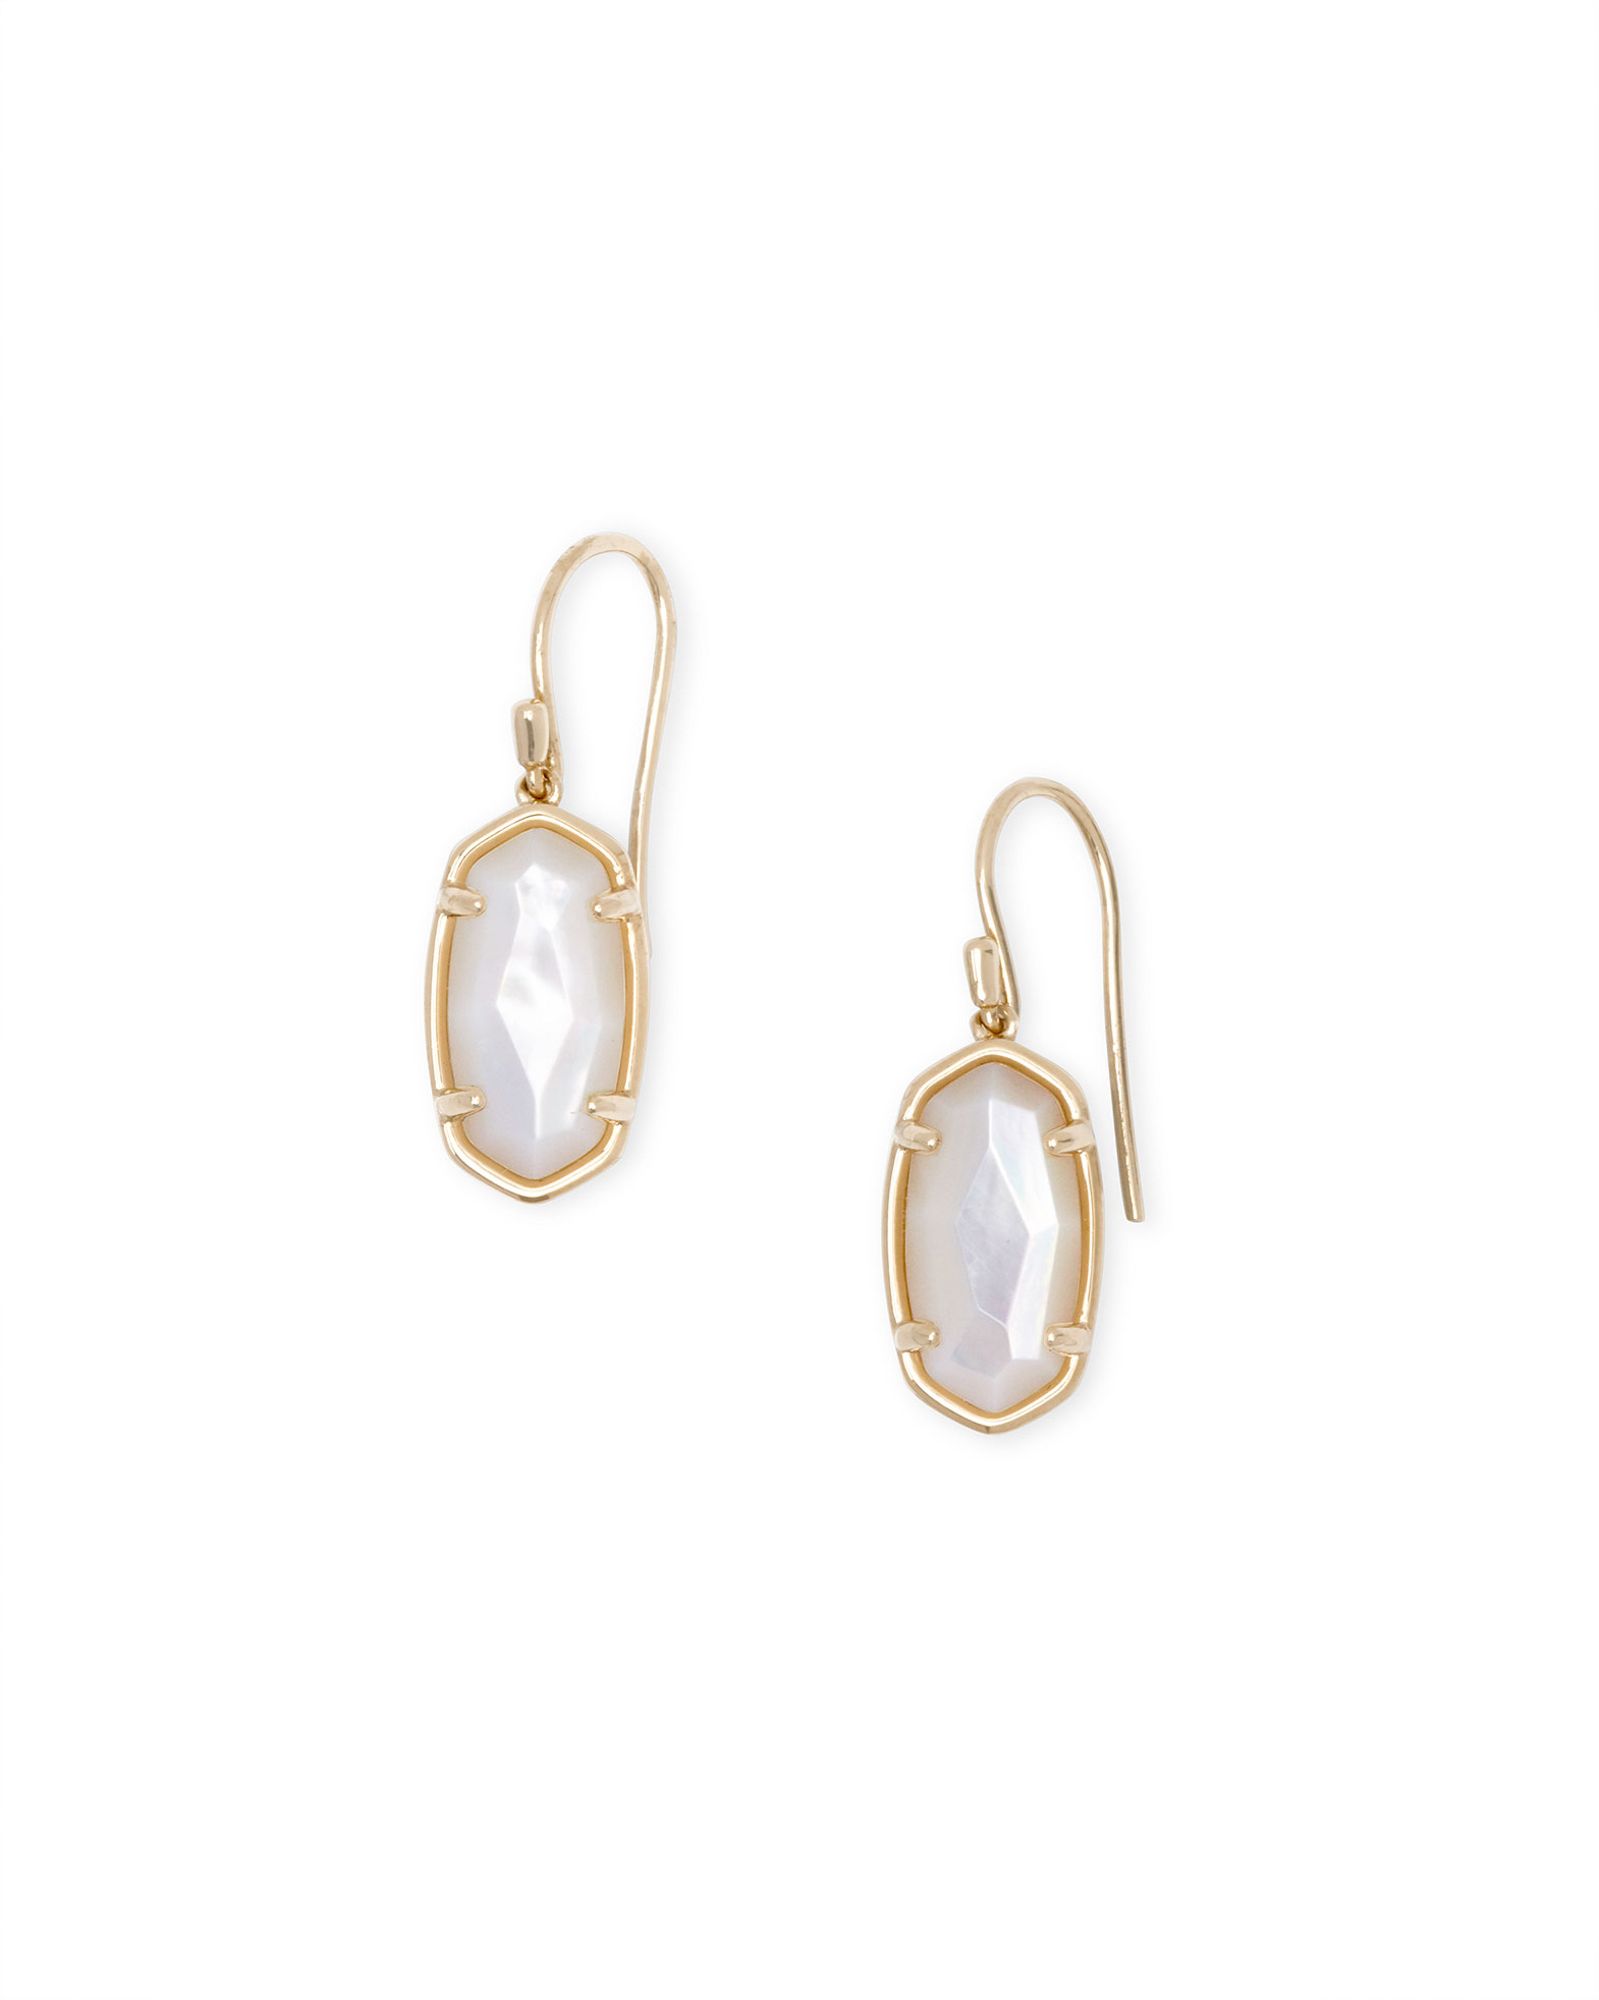 Lee 18k Gold Vermeil Drop Earrings in Ivory Mother-of-Pearl | Kendra Scott